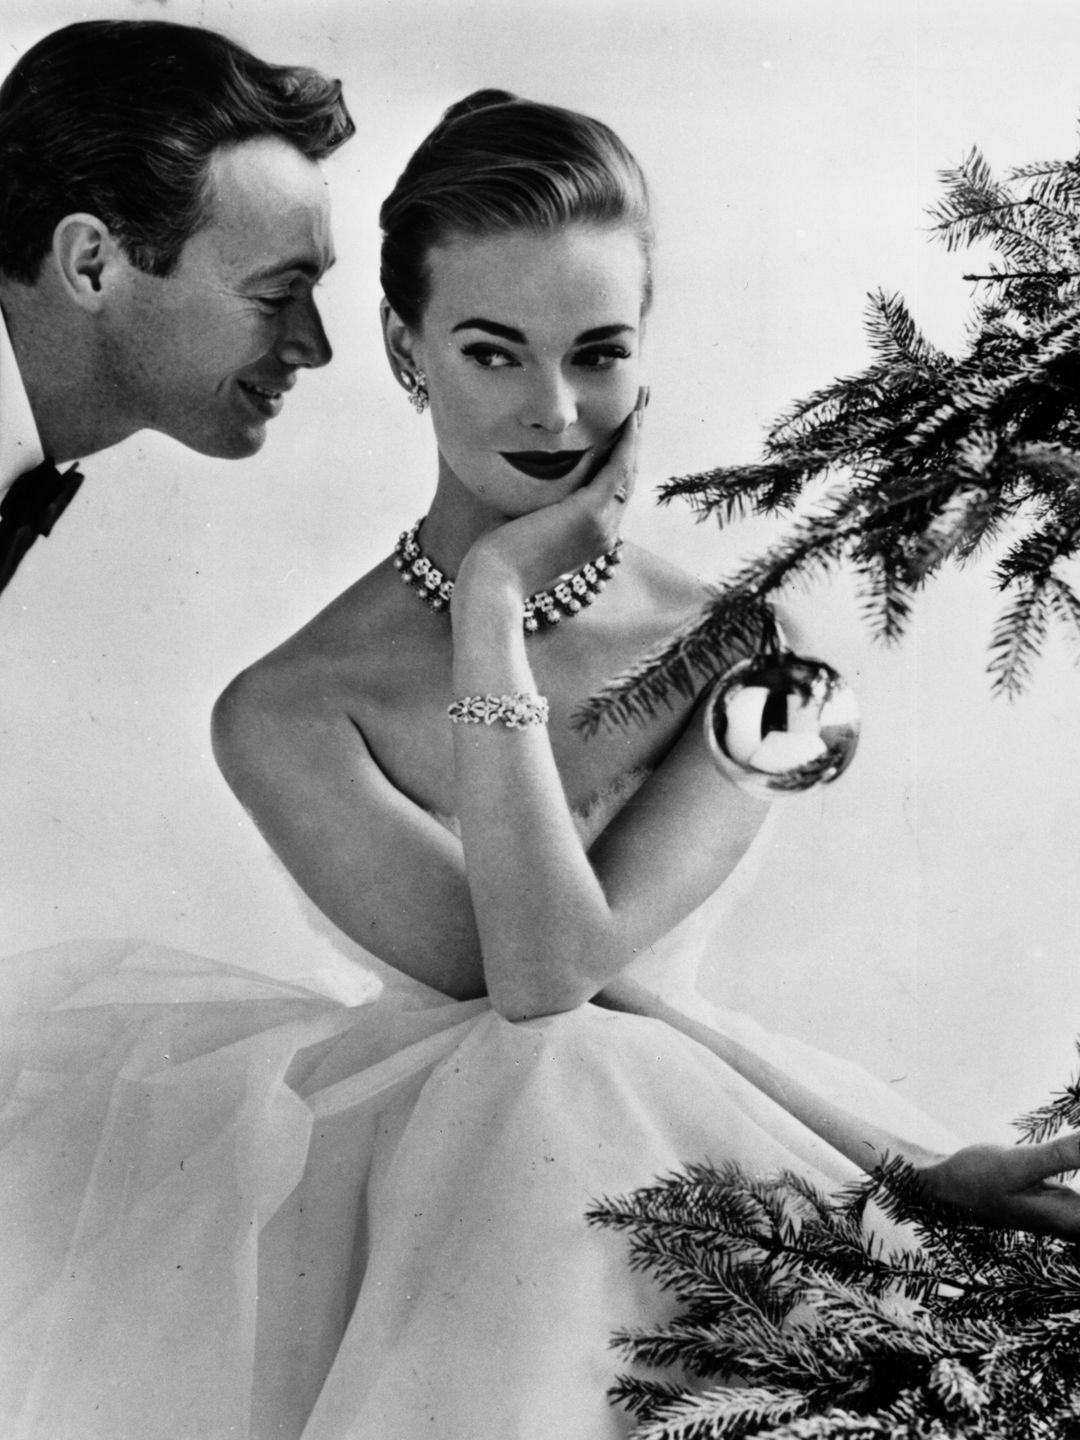 Model Susan Abraham poses beside a Christmas tree, December 1955.